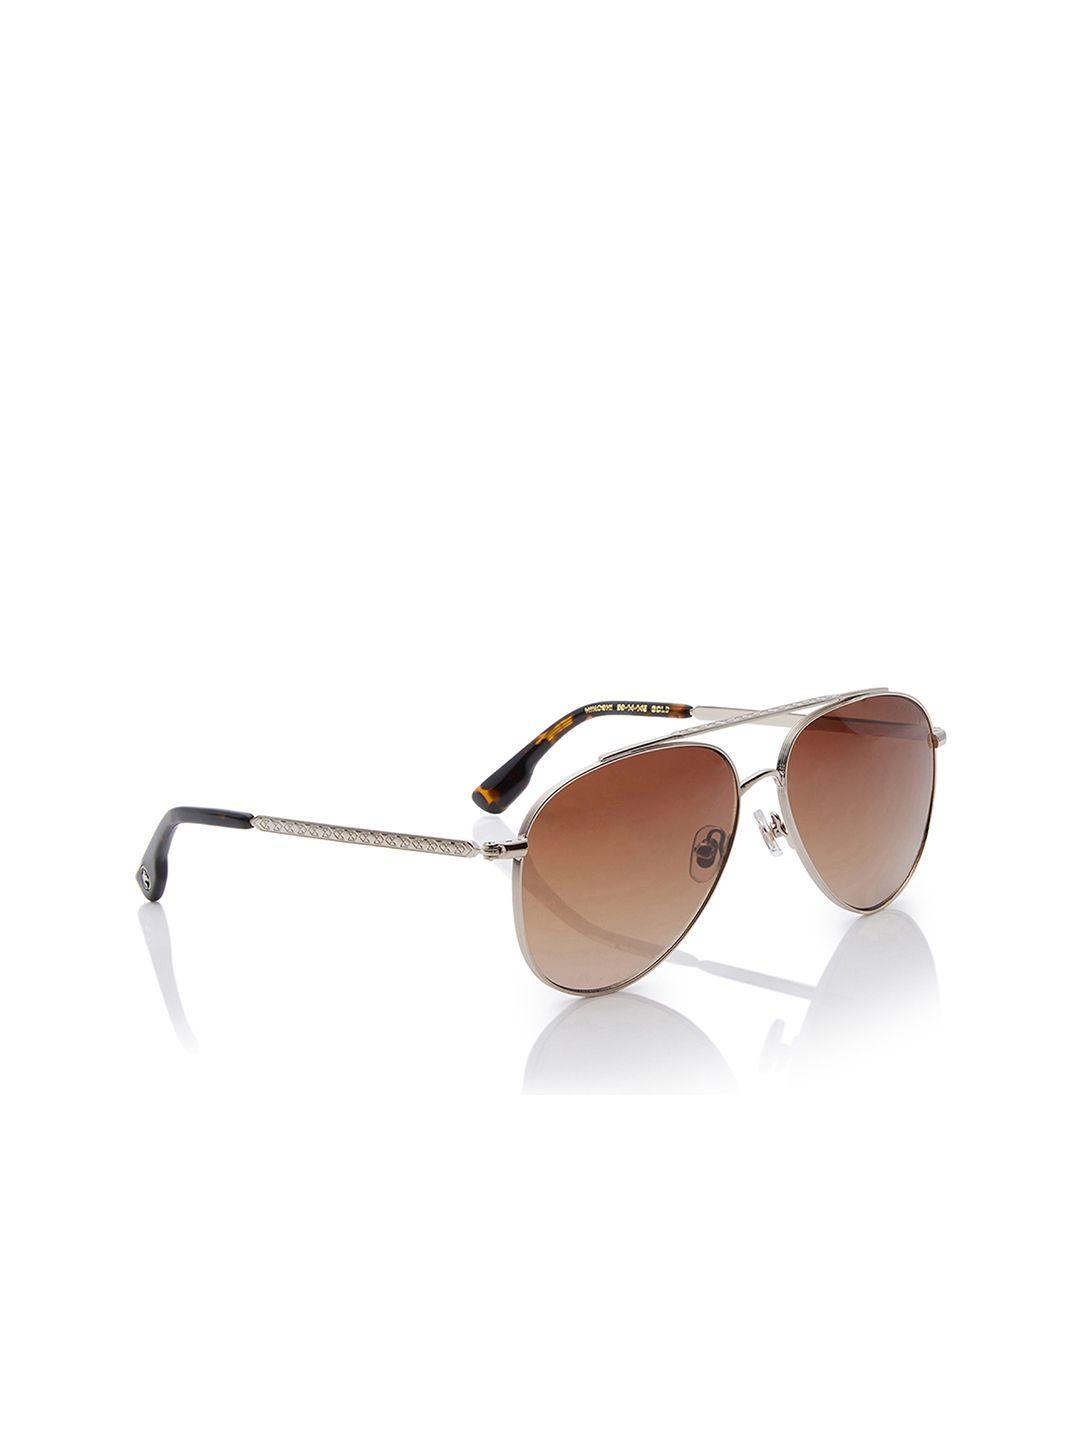 shisen fox unisex aviator sunglasses with uv protected lens